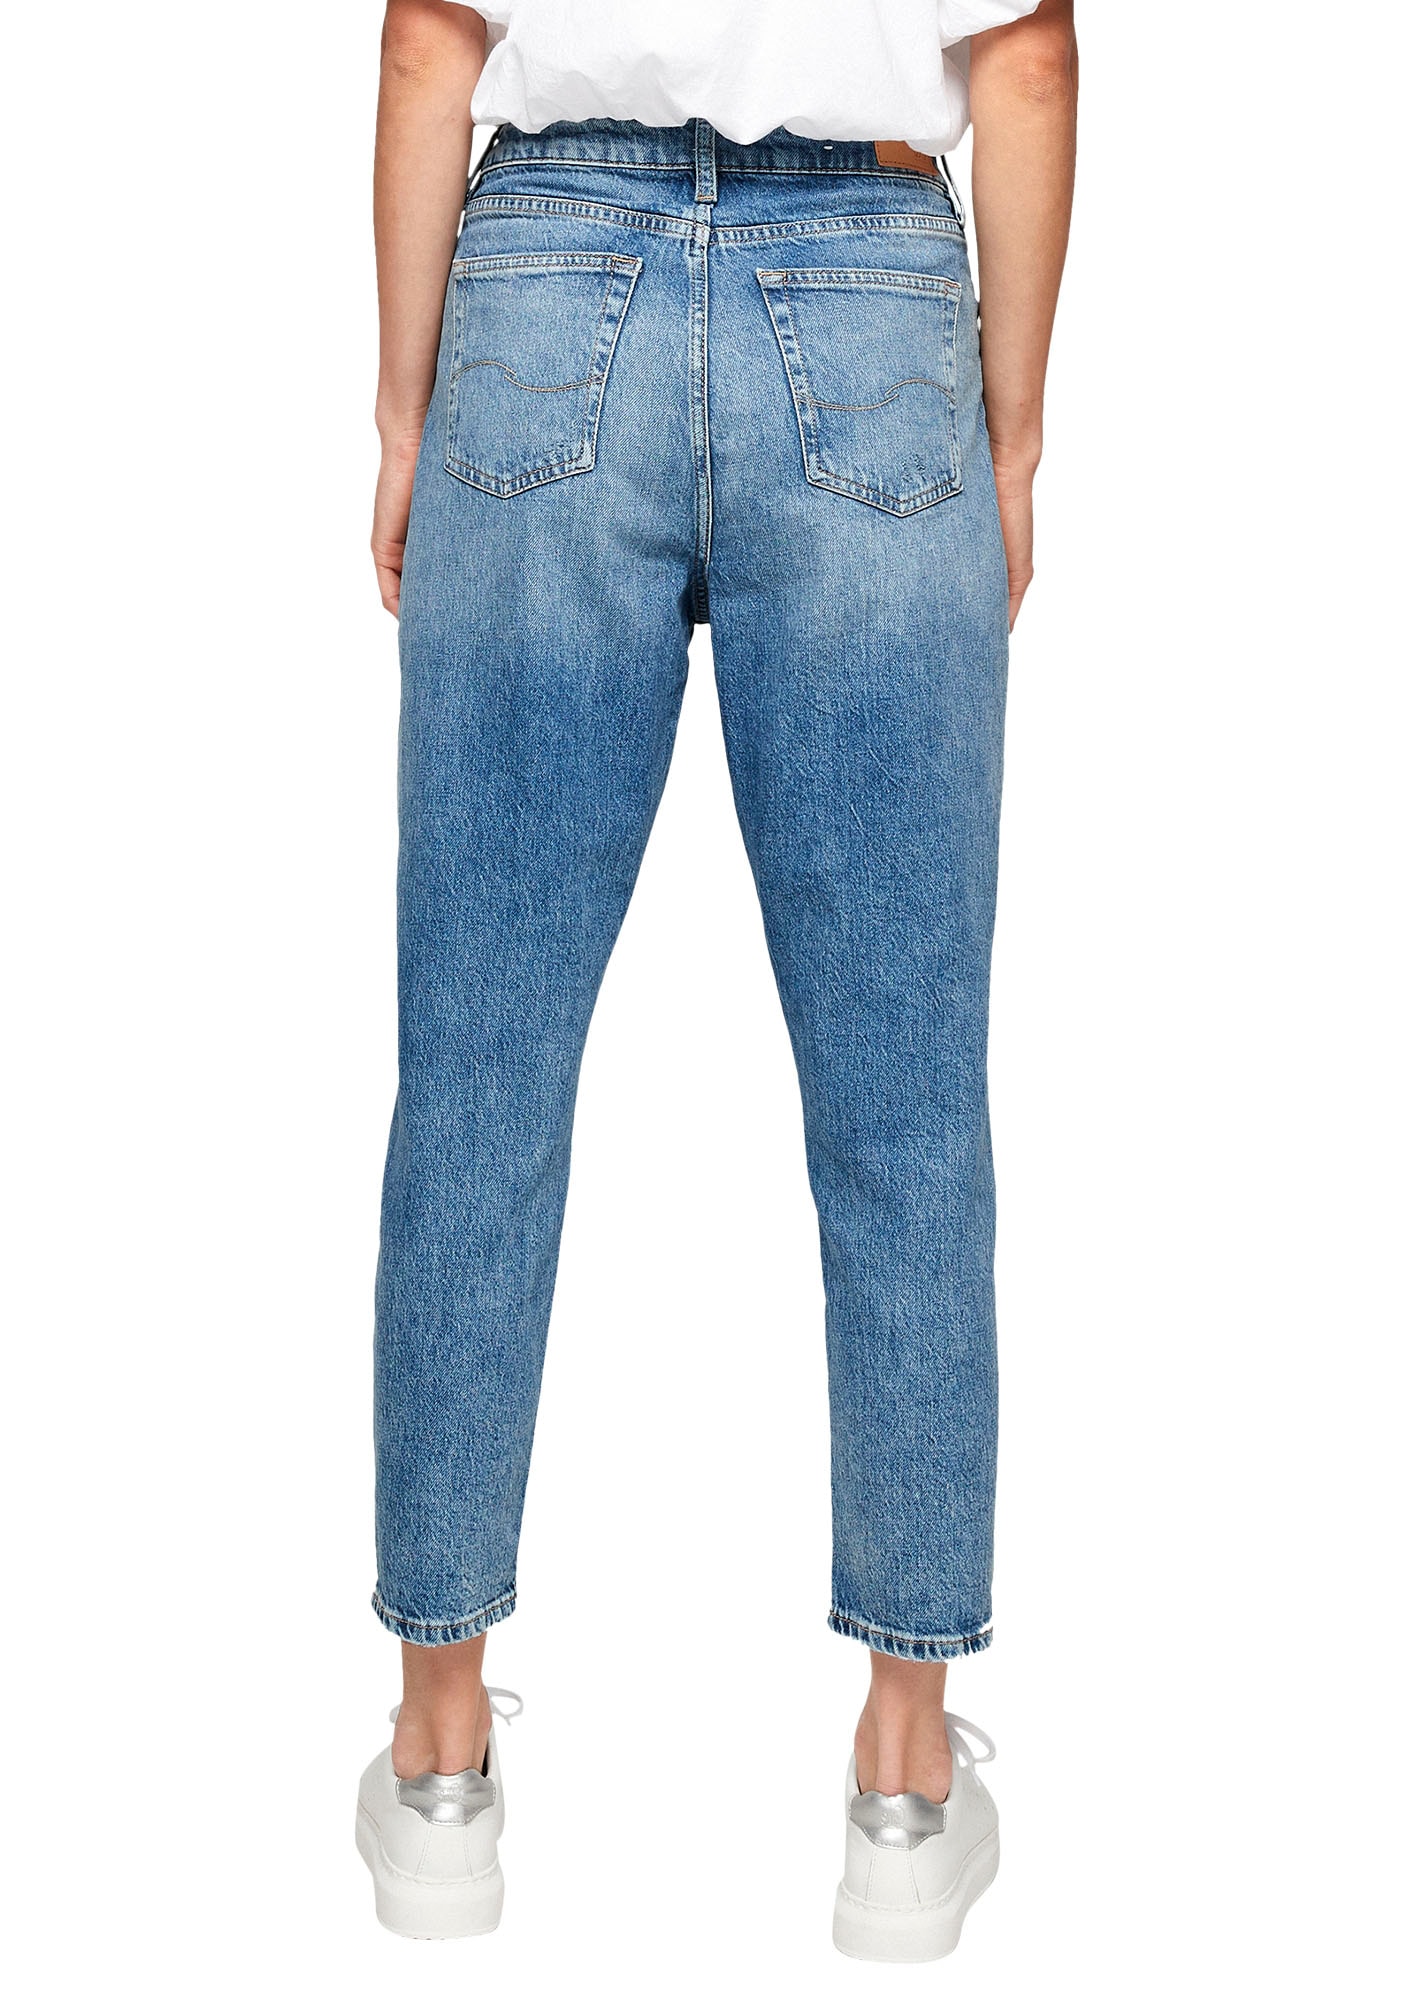 by Online im im Q/S Shop Tapered-fit-Jeans, klassischen 5-Pocket-Style OTTO s.Oliver